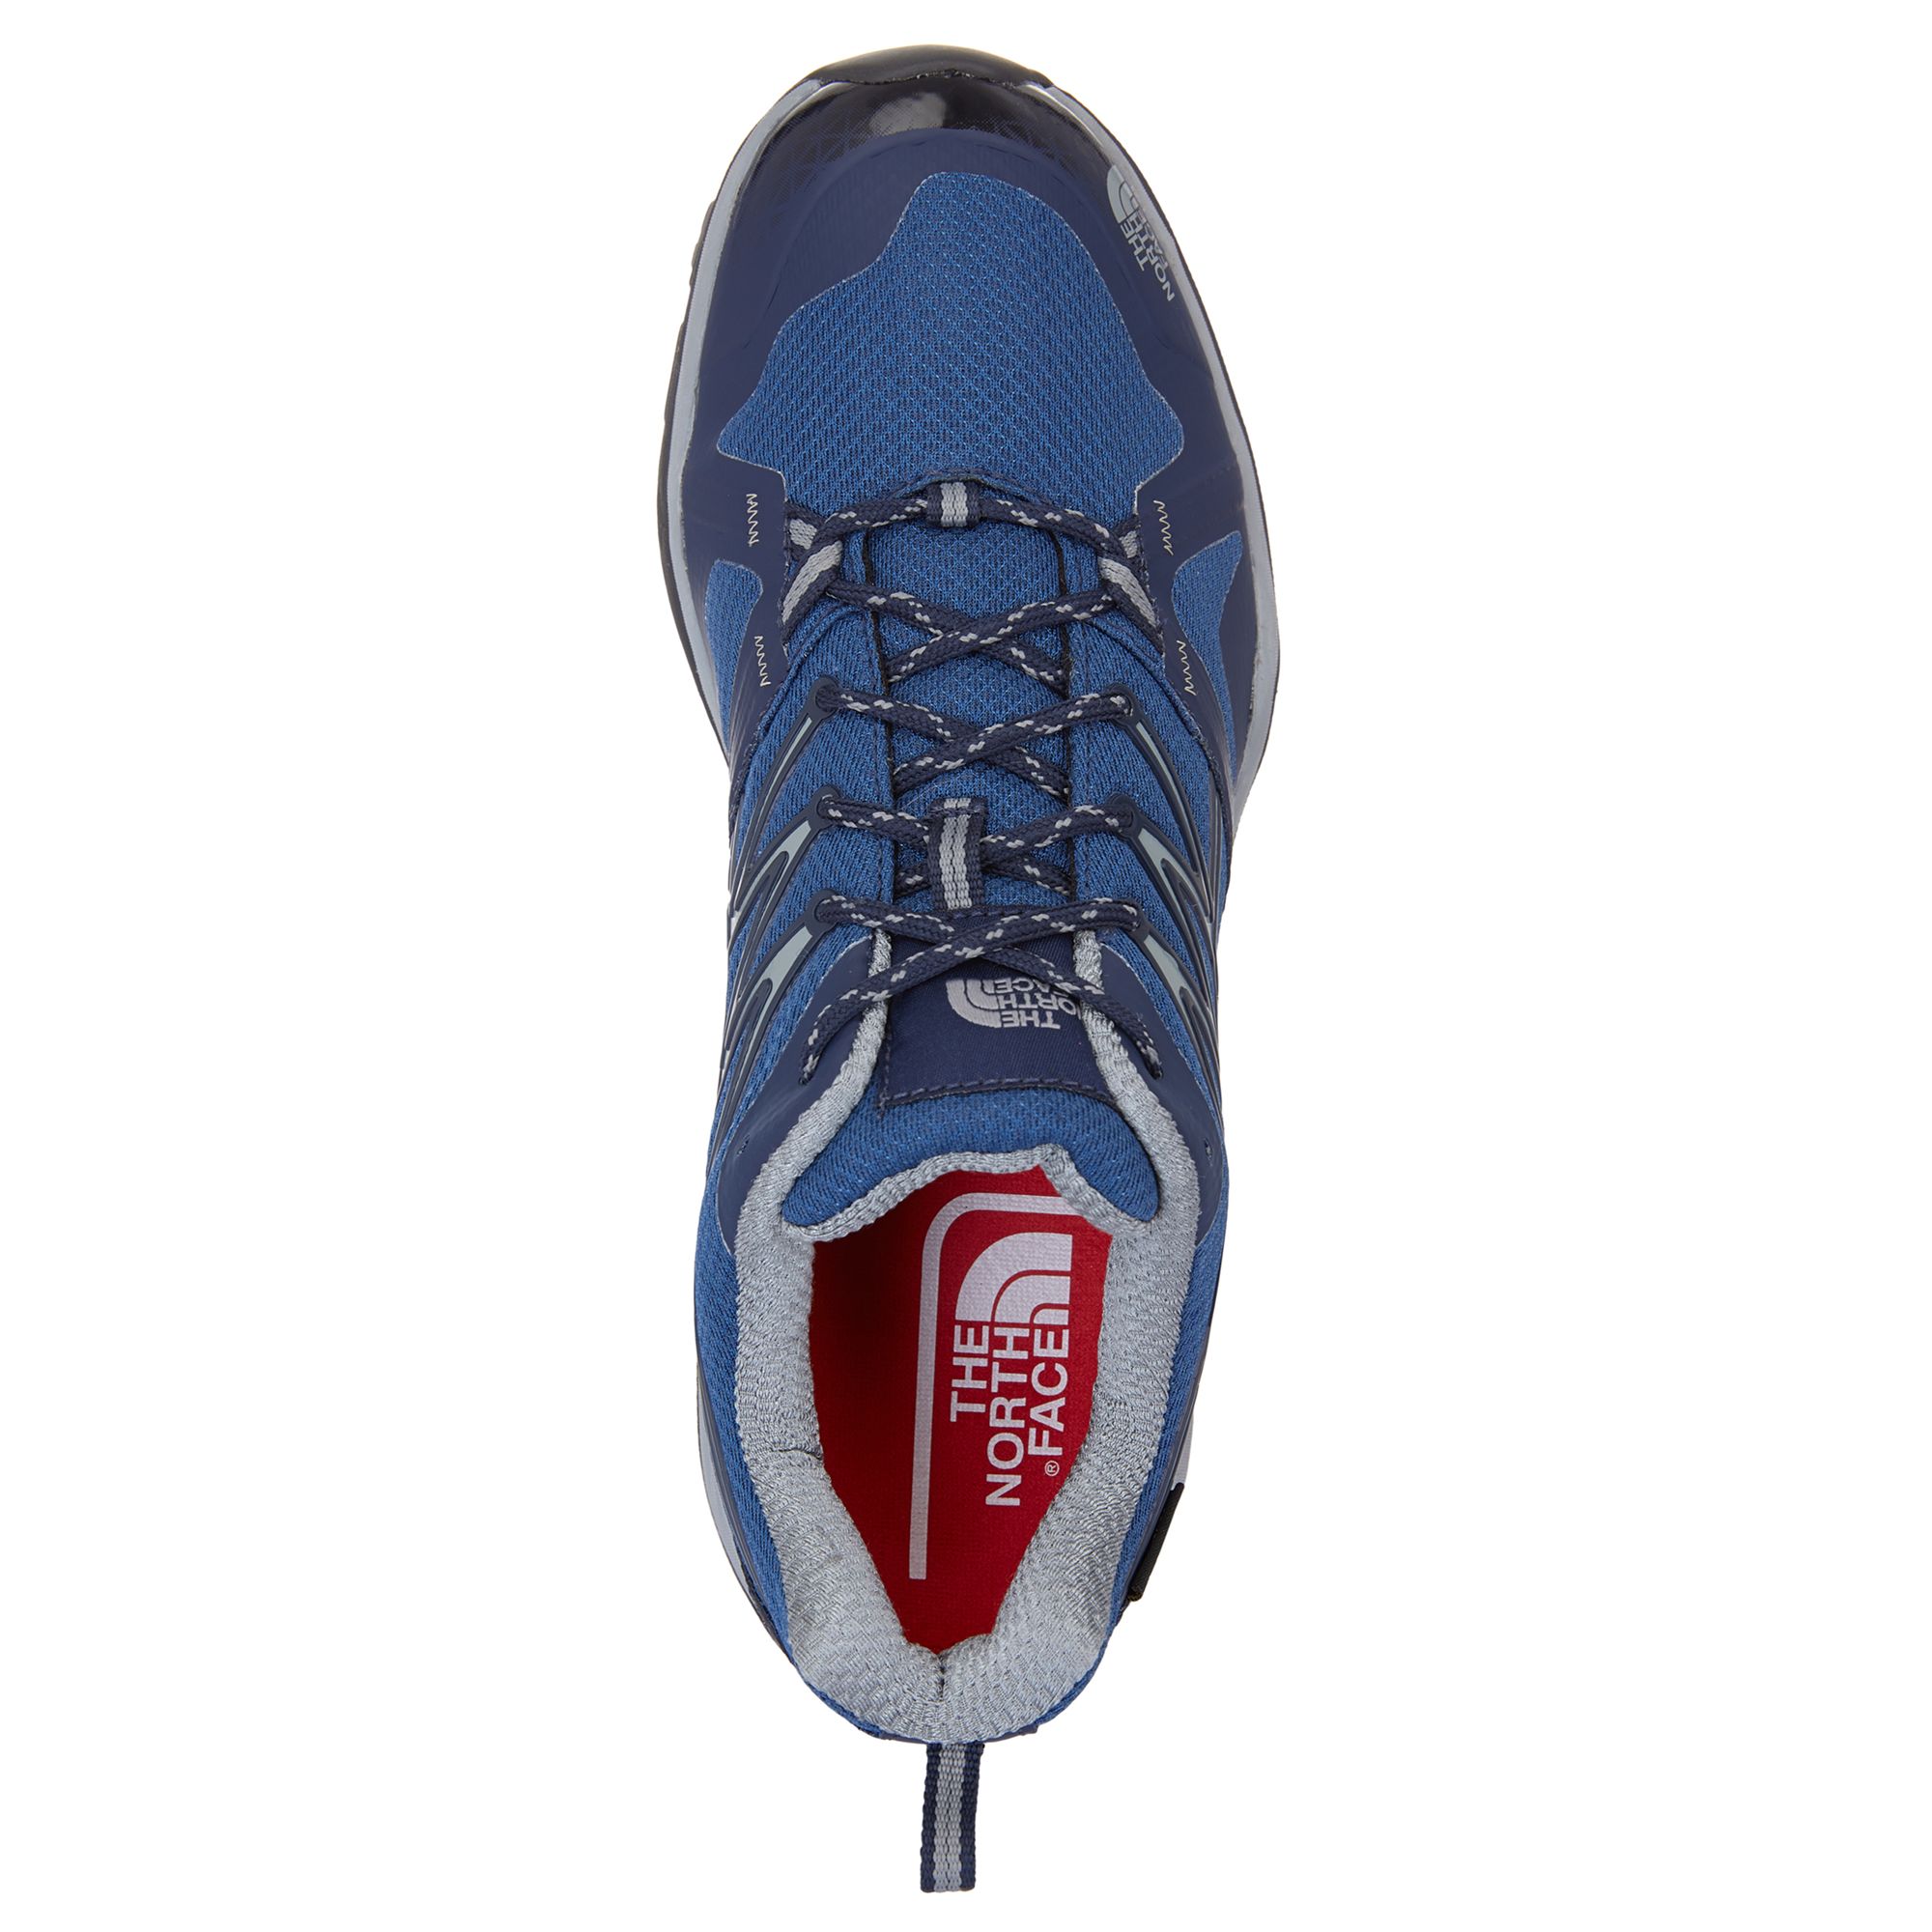 Correct park toenemen The North Face Hedgehog Fastpack Lite Men's Hiking Shoes, Blue/Multi